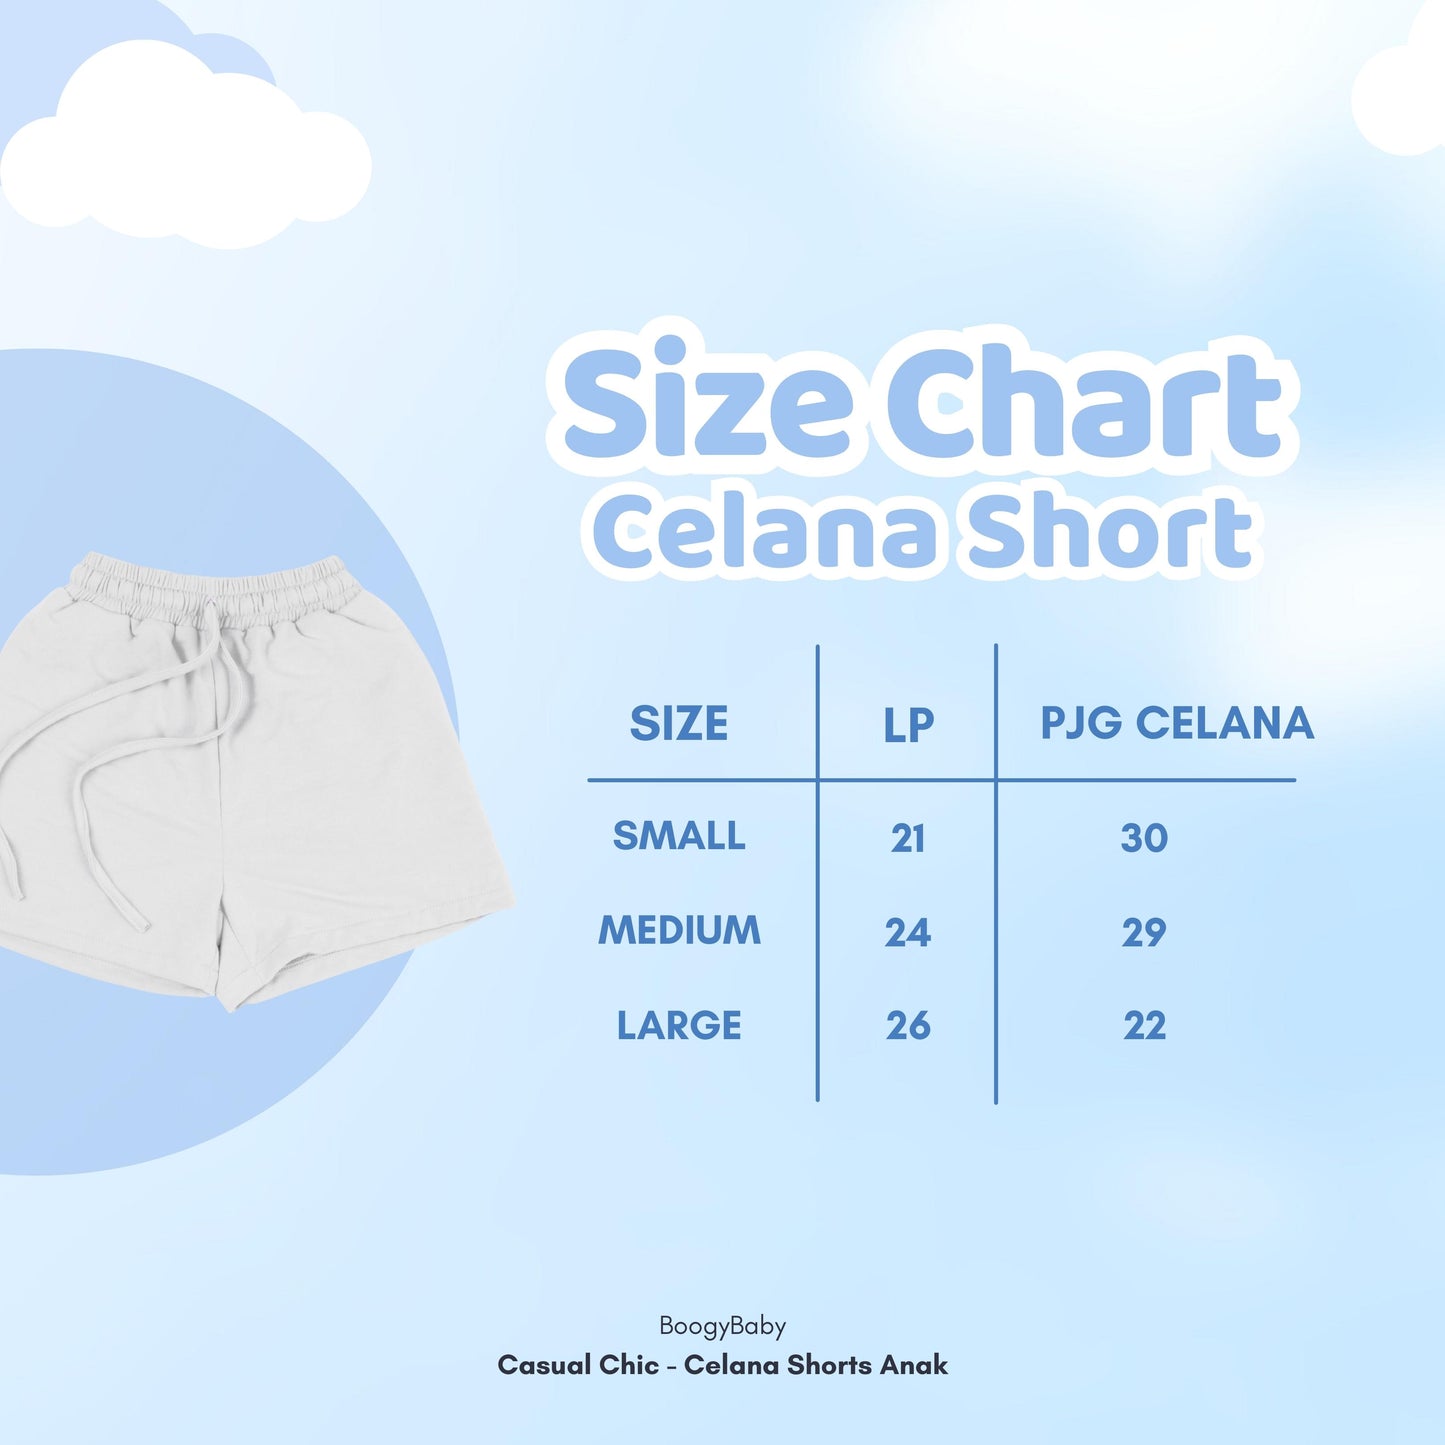 Celana Shorts Anak (Casual Chic)